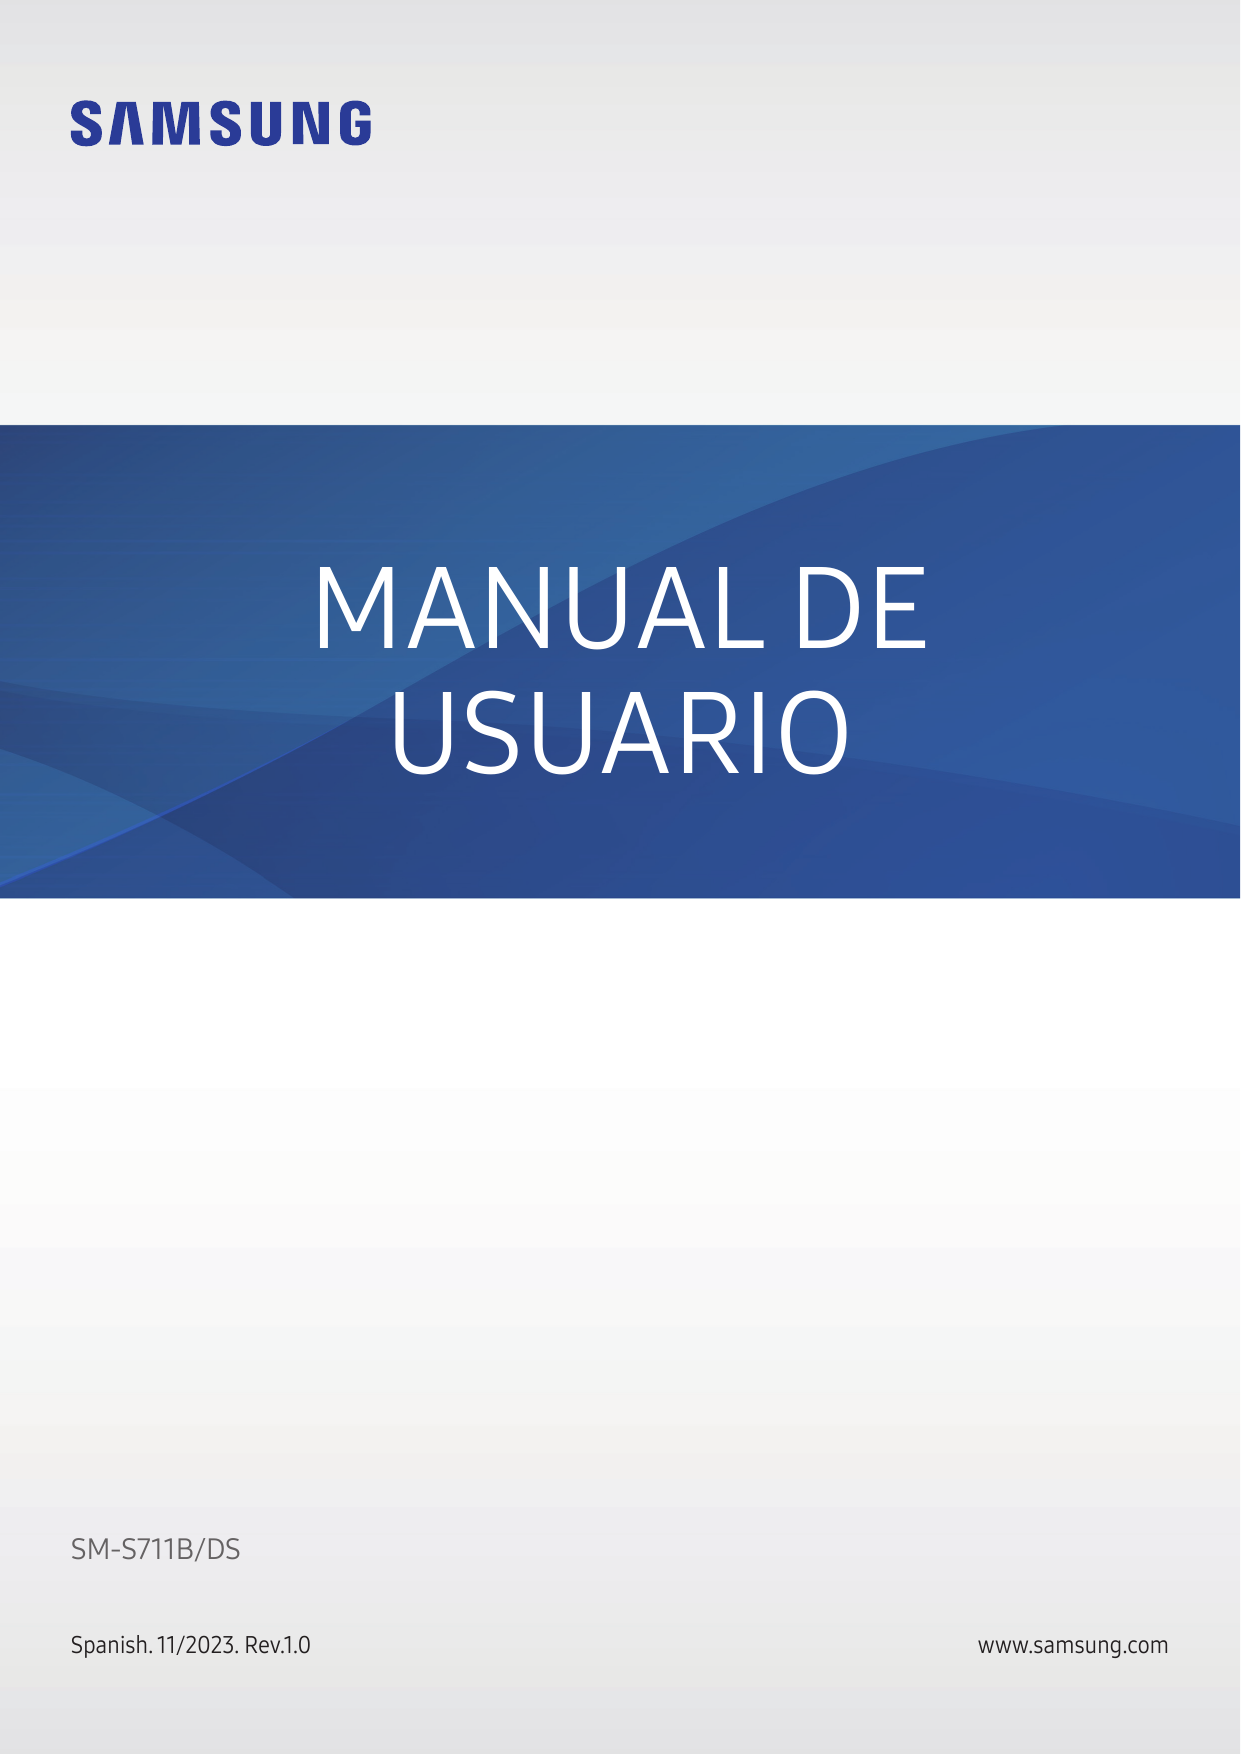 MANUAL DEUSUARIOSM-S711B/DSSpanish. 11/2023. Rev.1.0www.samsung.com